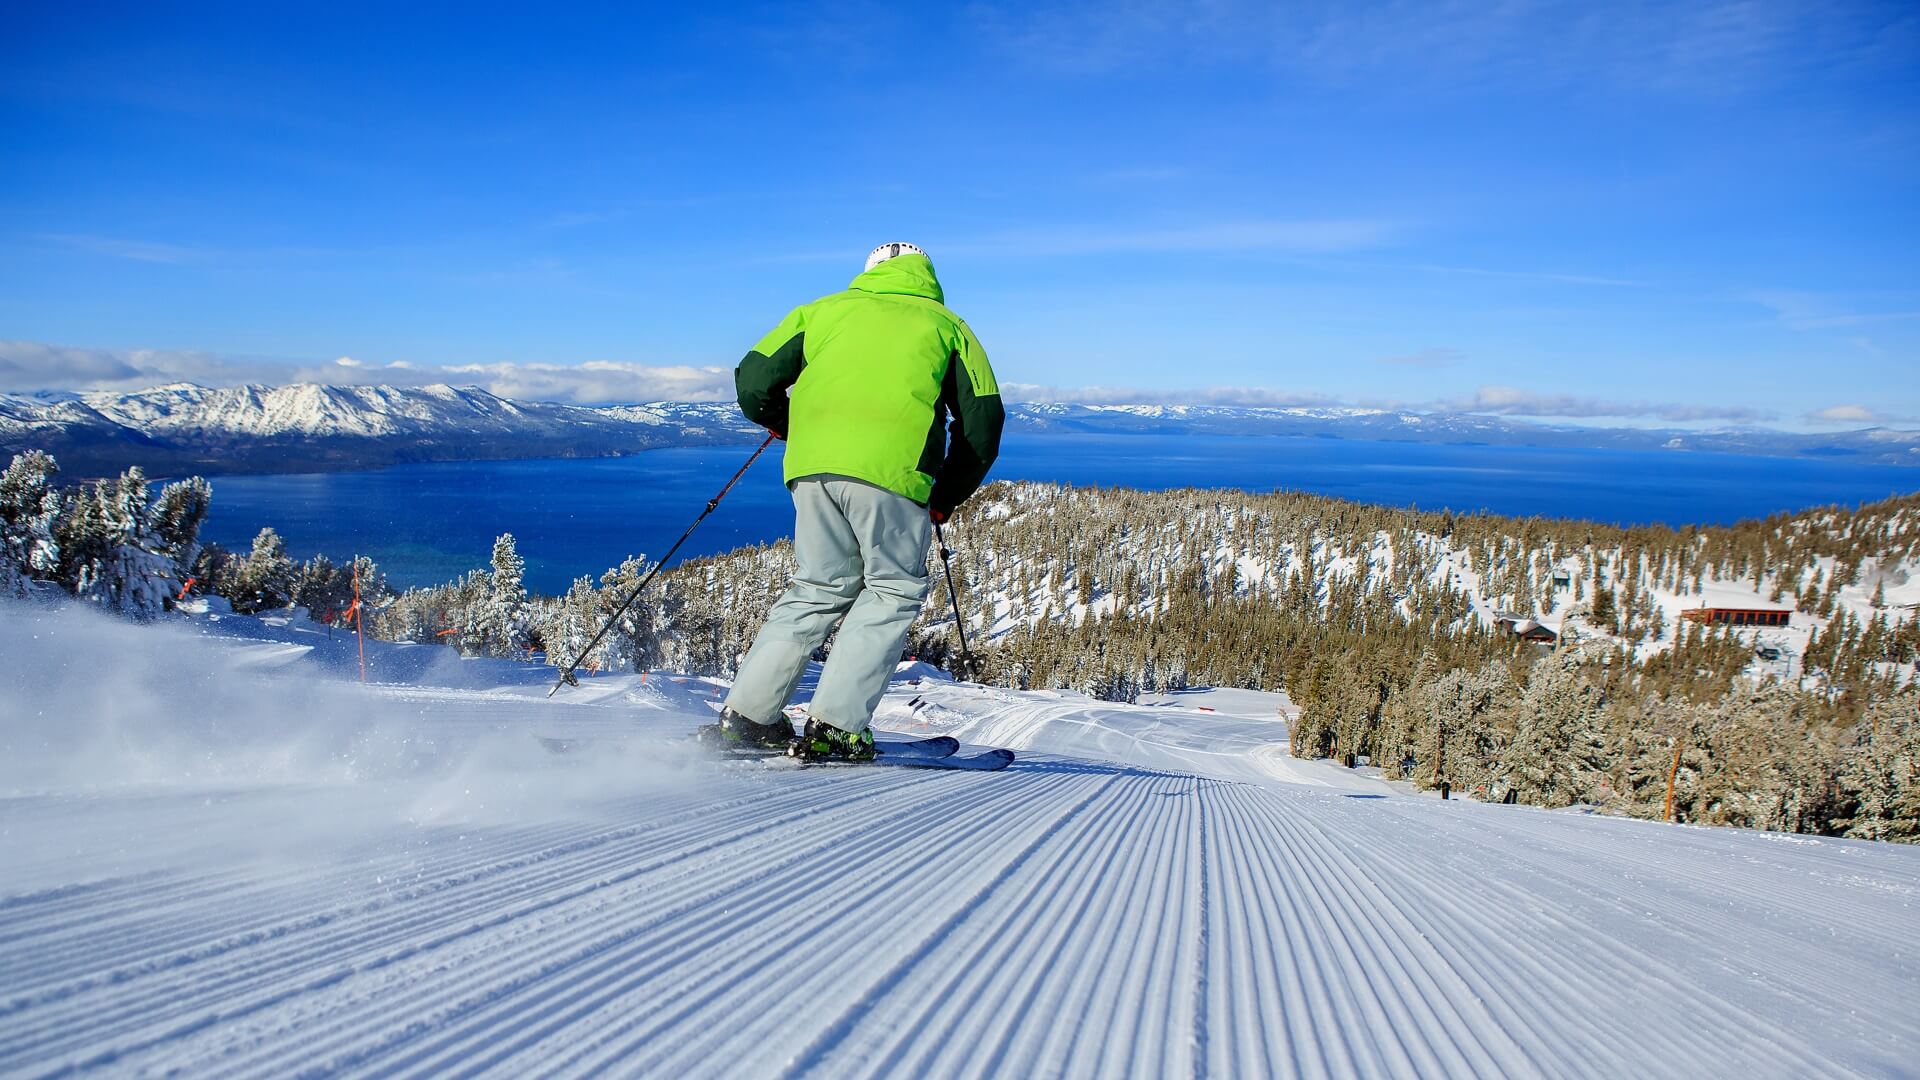 Skiing at Heavenly Mountain Resort